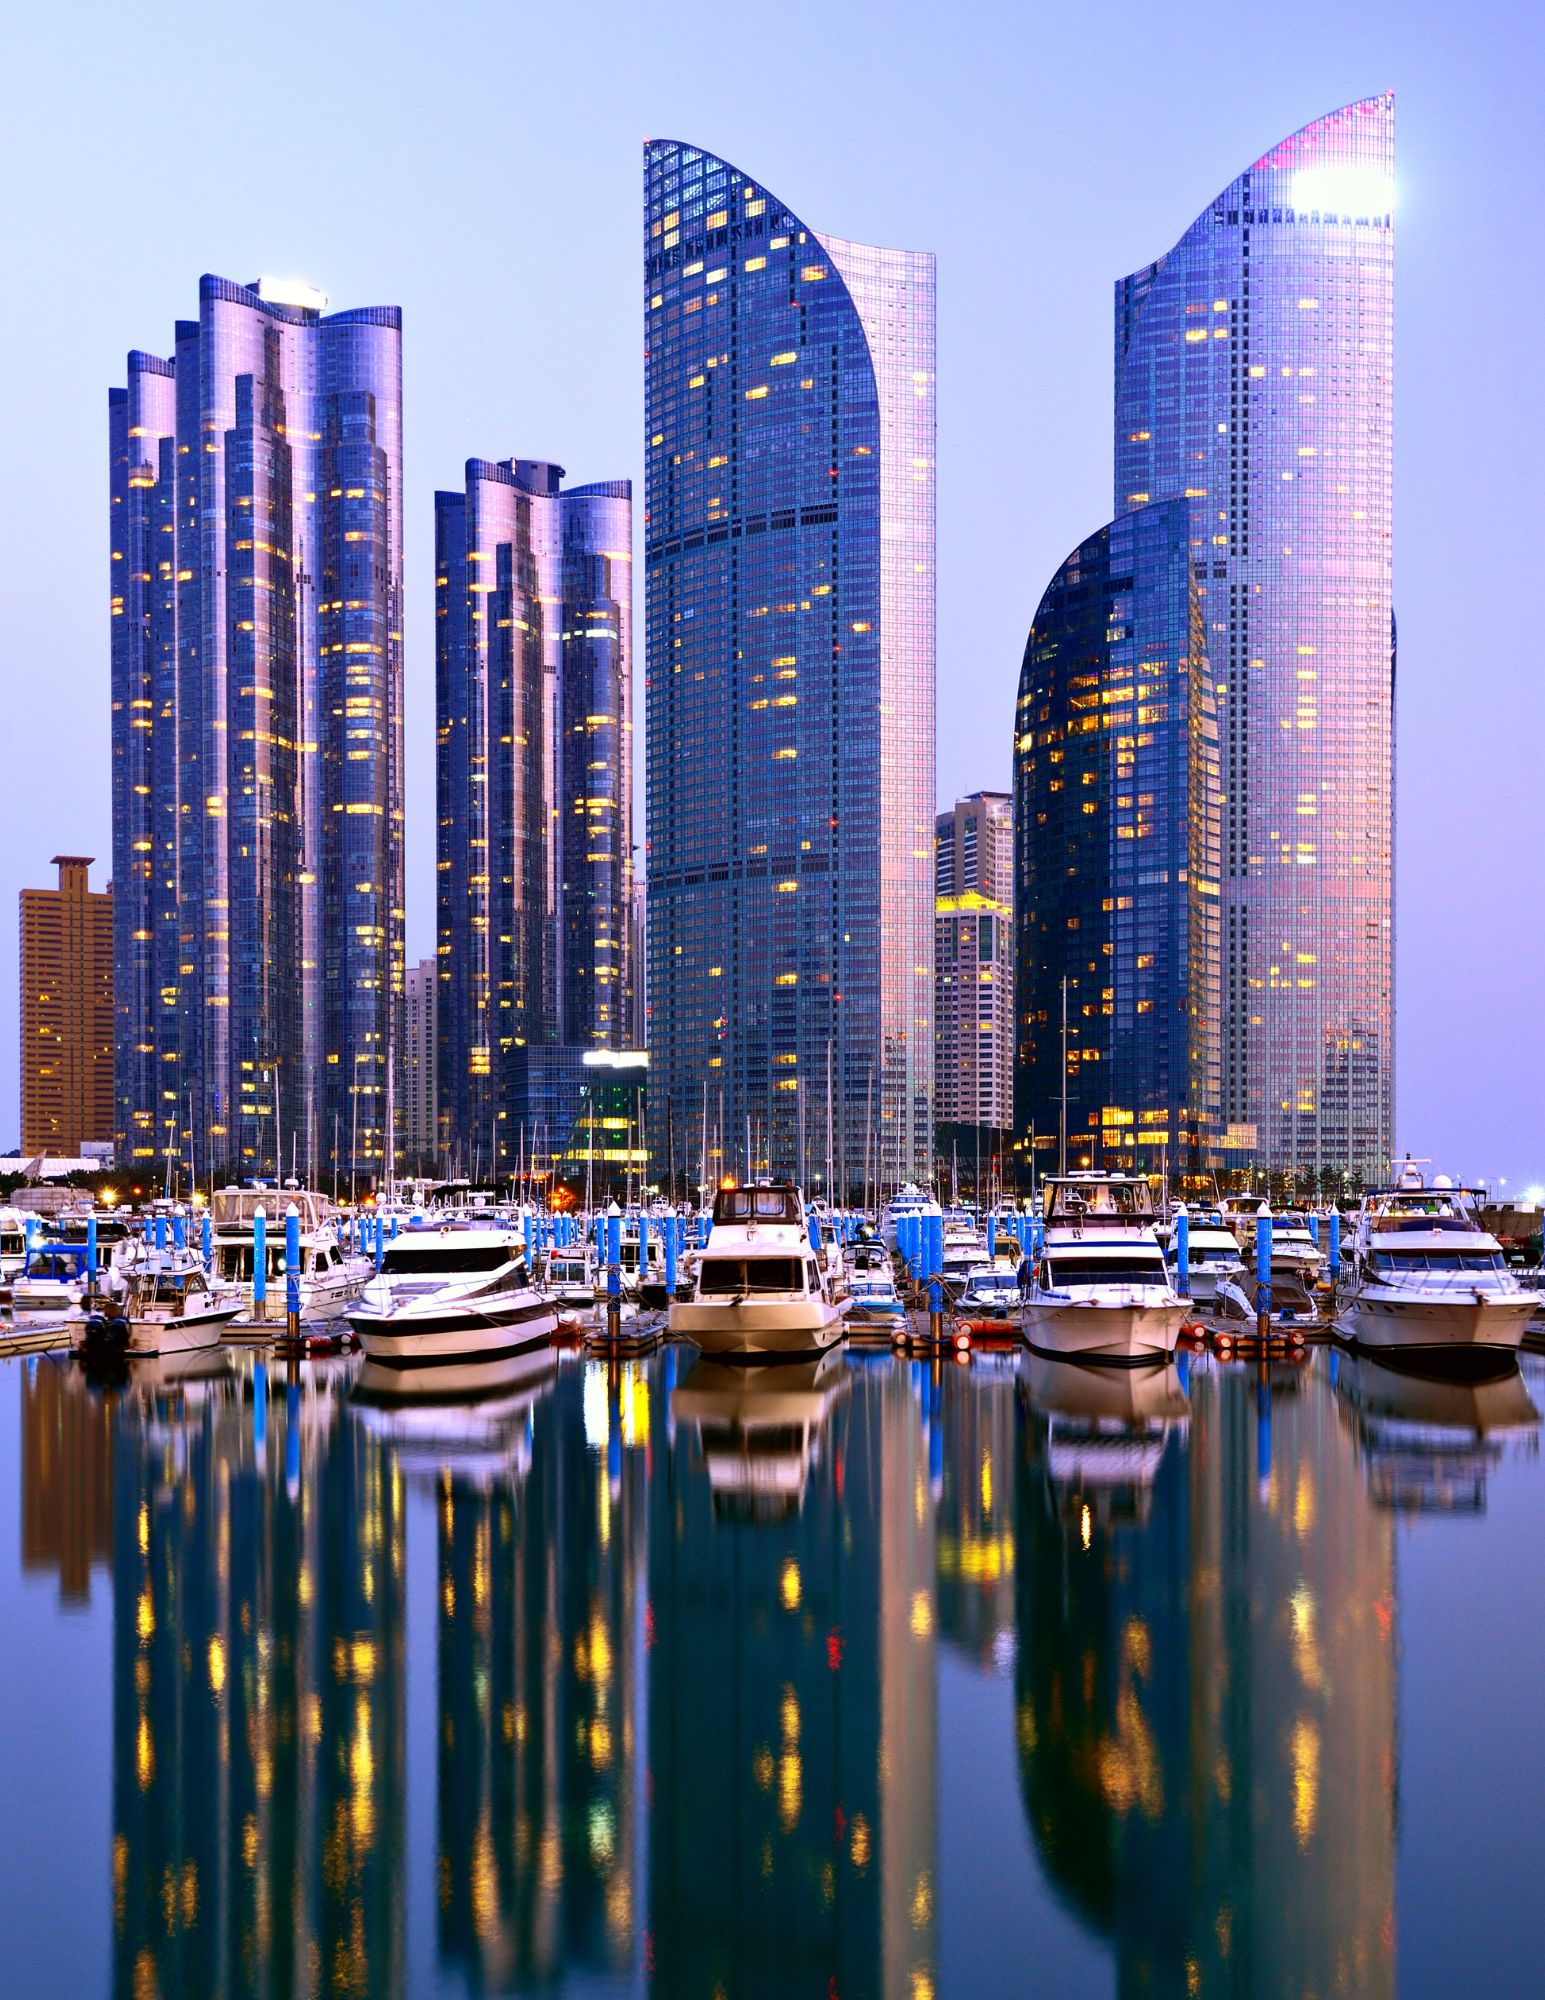 Image of skyscrapers along water in Busan